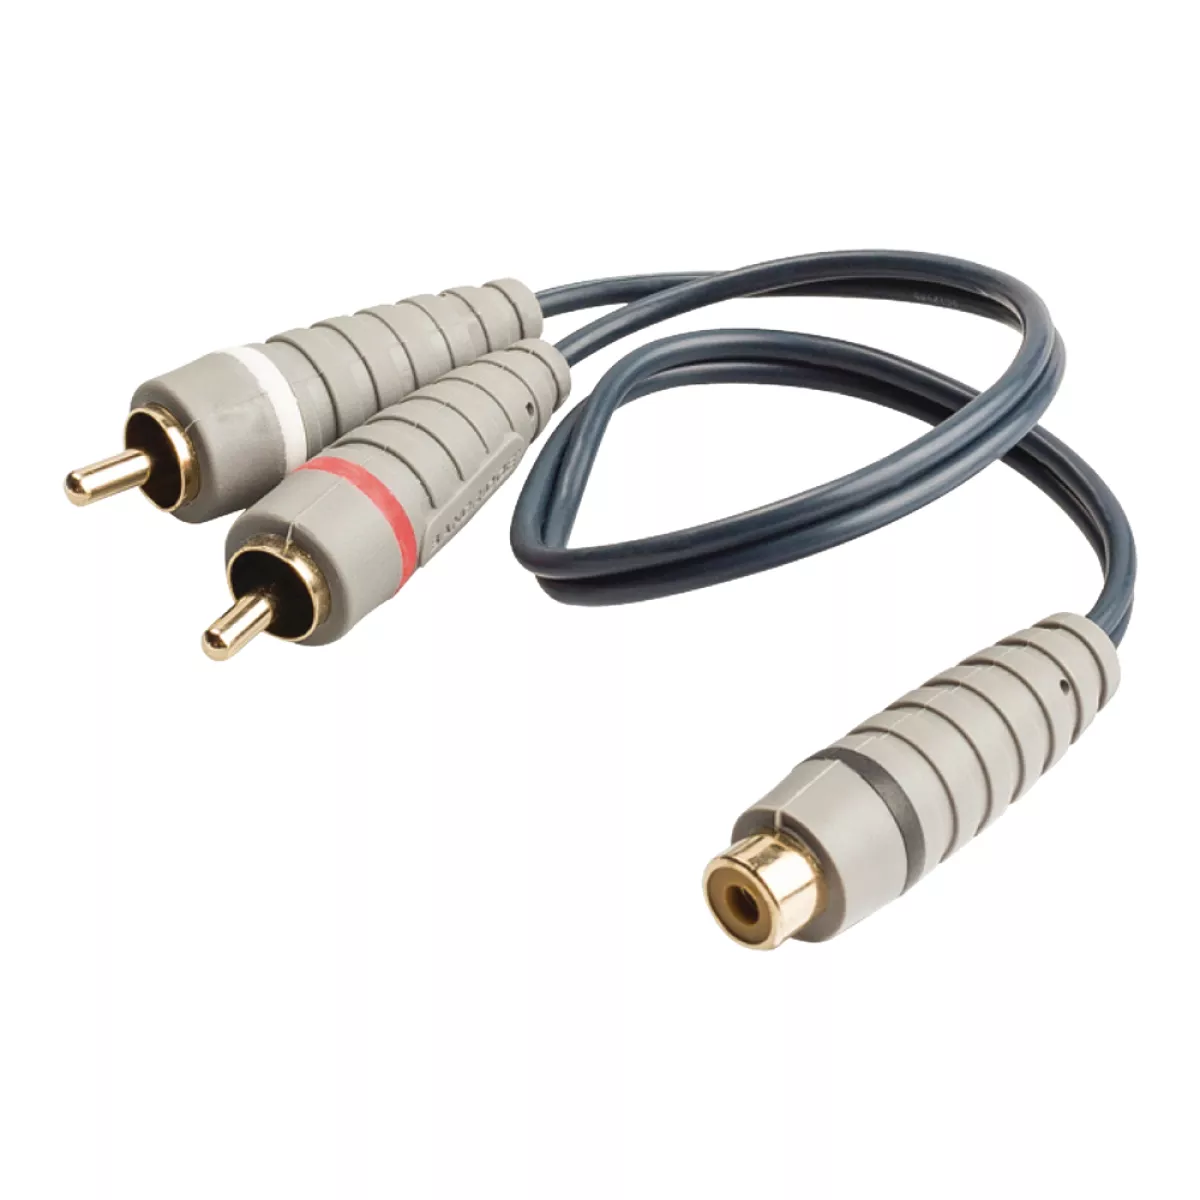 #1 - Premium Kabel til subwoofer - 2x RCA (han) / 1x RCA (hun) splitter kabel 0.20m